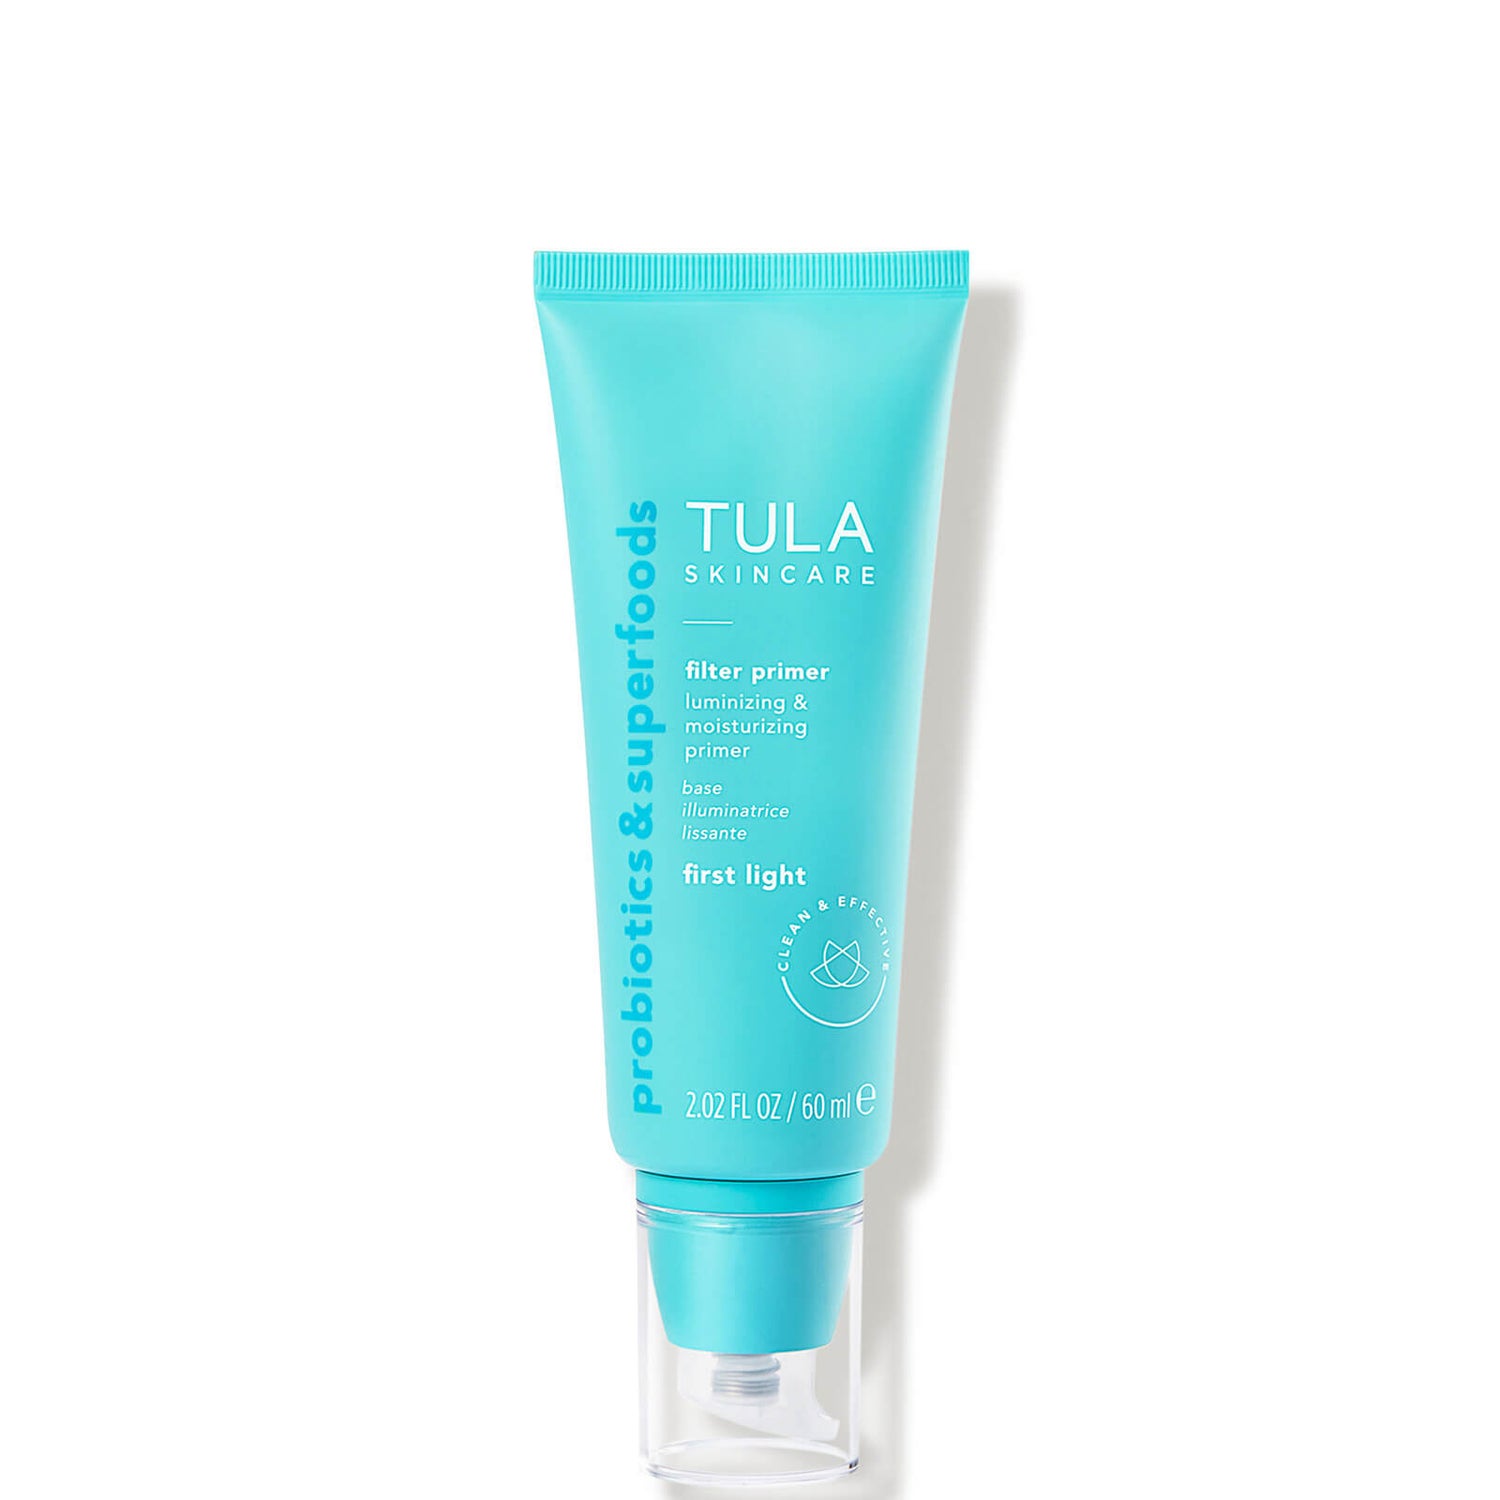 TULA Skincare Face Filter Blurring Moisturizing Primer - Supersize 2 oz.